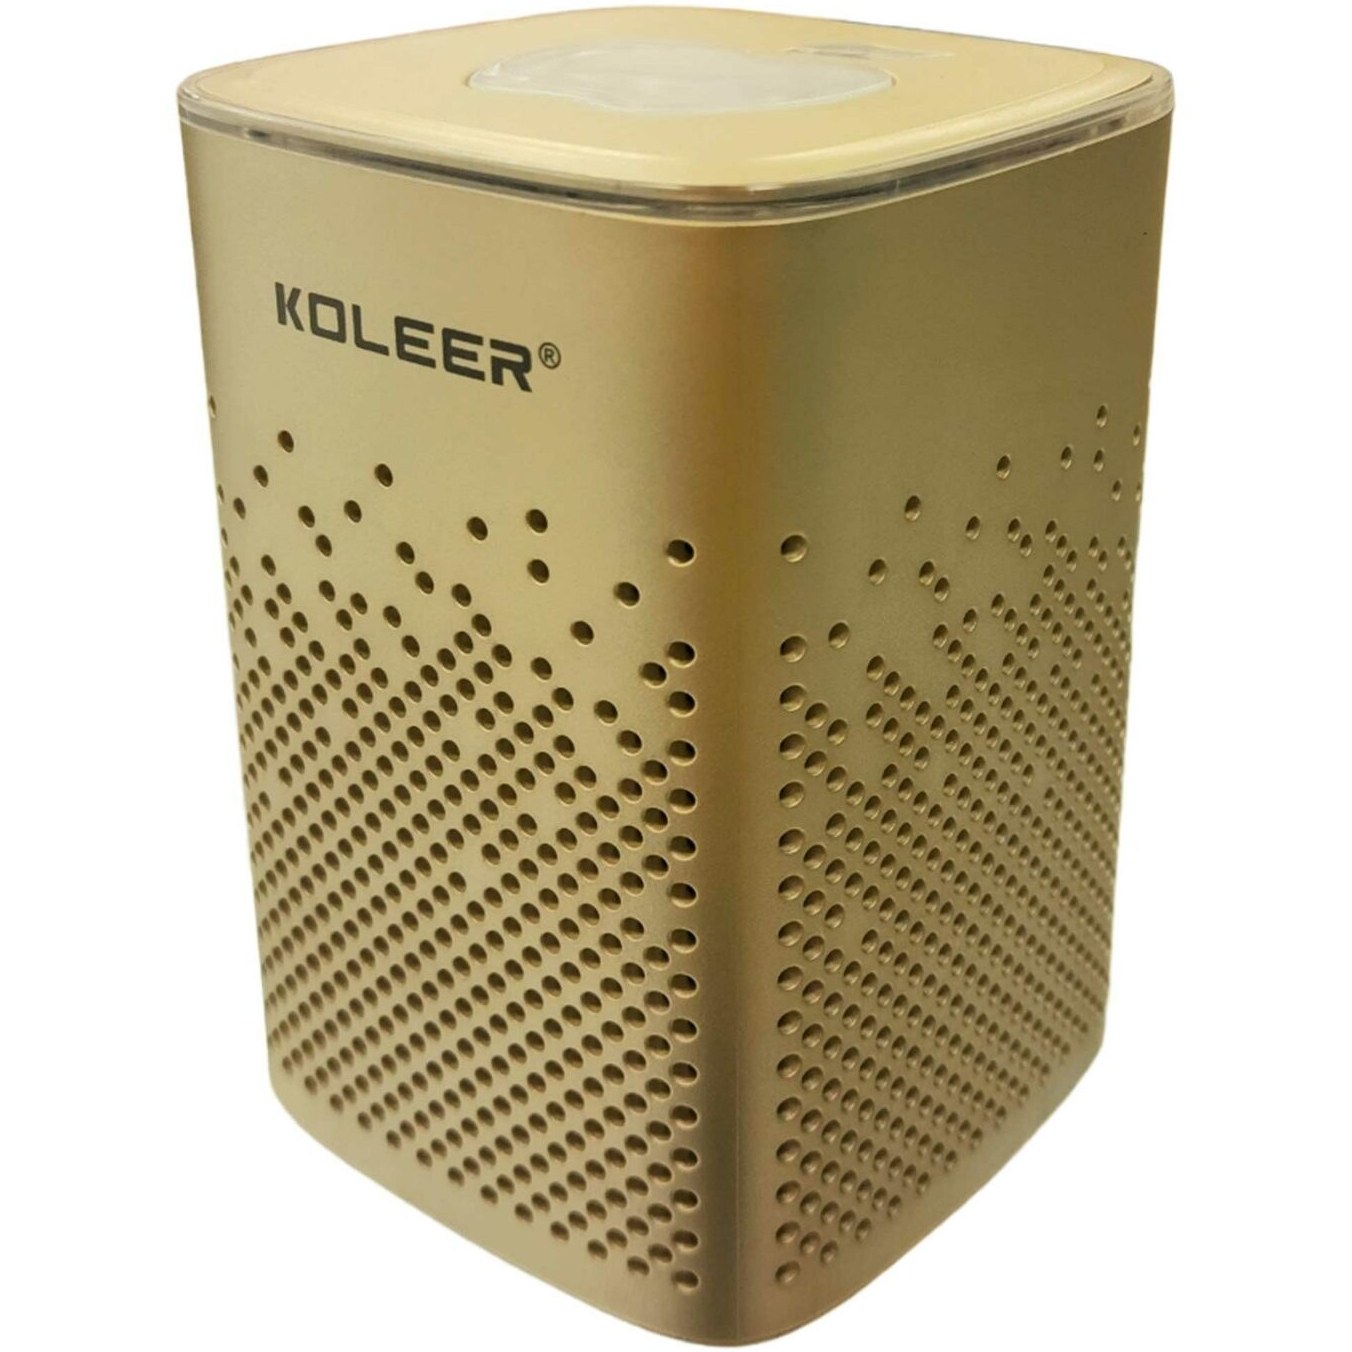 خرید و قیمت اسپیکر بلوتوث قابل حمل کلر مدل KOLEER S818 ا KOLEER S818Portable Bluetooth Speaker With Great Sound Quality And Radio | ترب